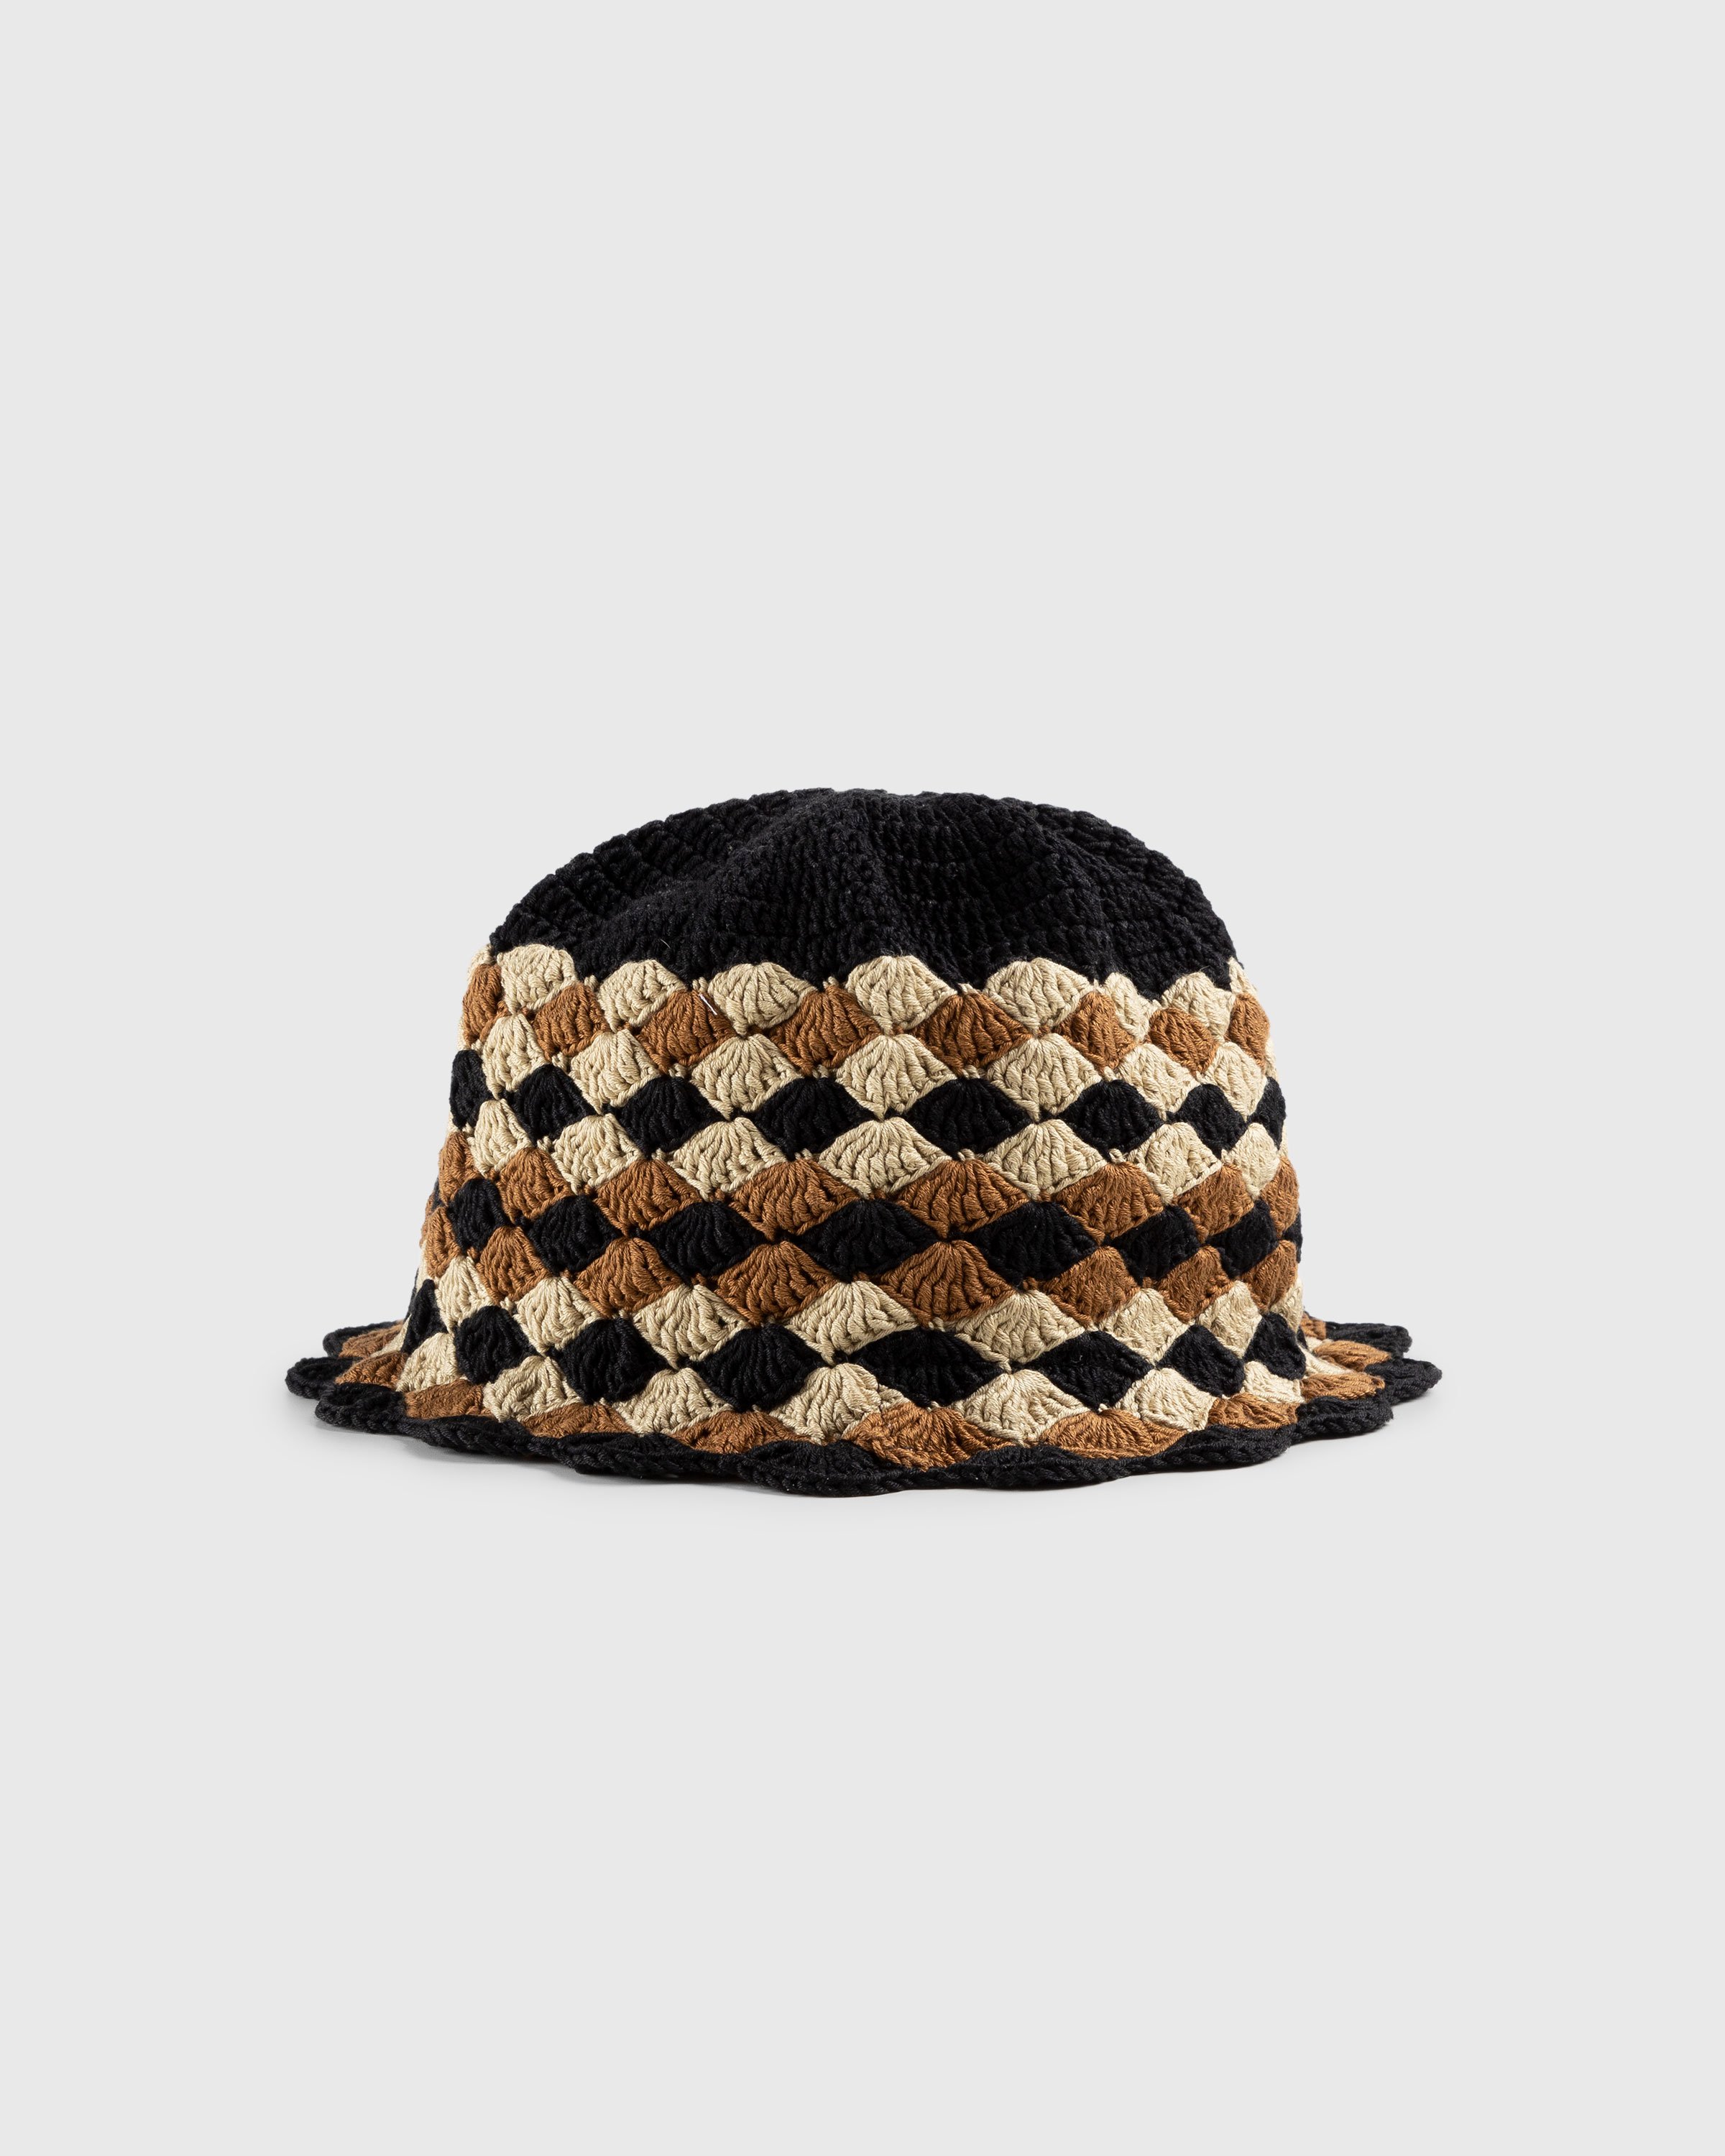 SSU - Seashell Stitch Crochet Bucket Hat Black/Brown - Accessories - Black - Image 1